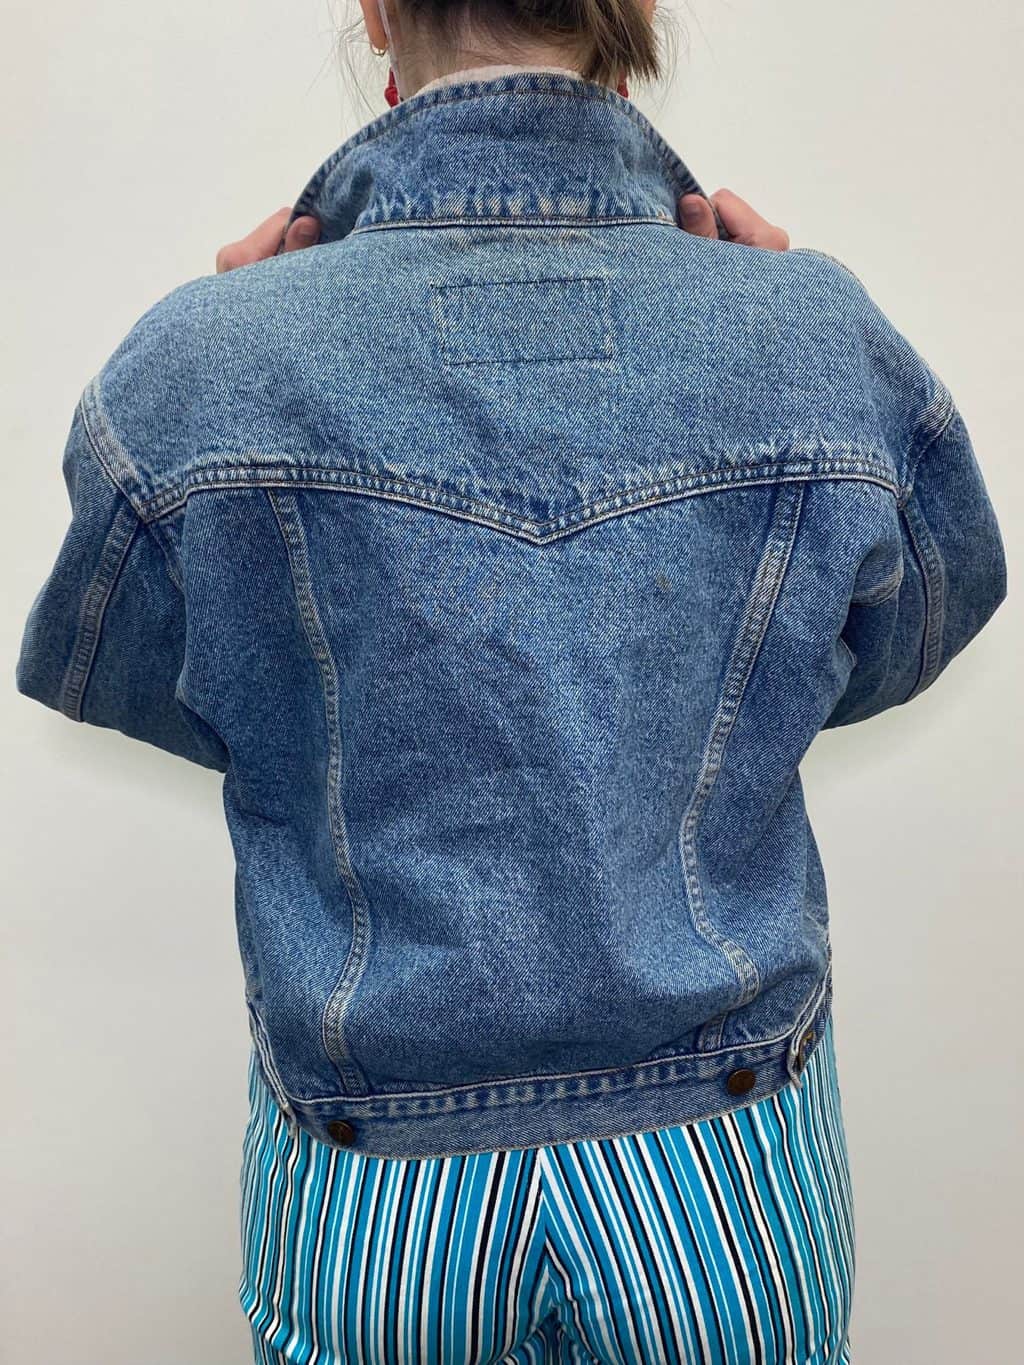 Womens Wrangler vintage denim jacket in stonewash blue with cropped length,  circa 1990 / 1980 - Medium - St Cyr Vintage